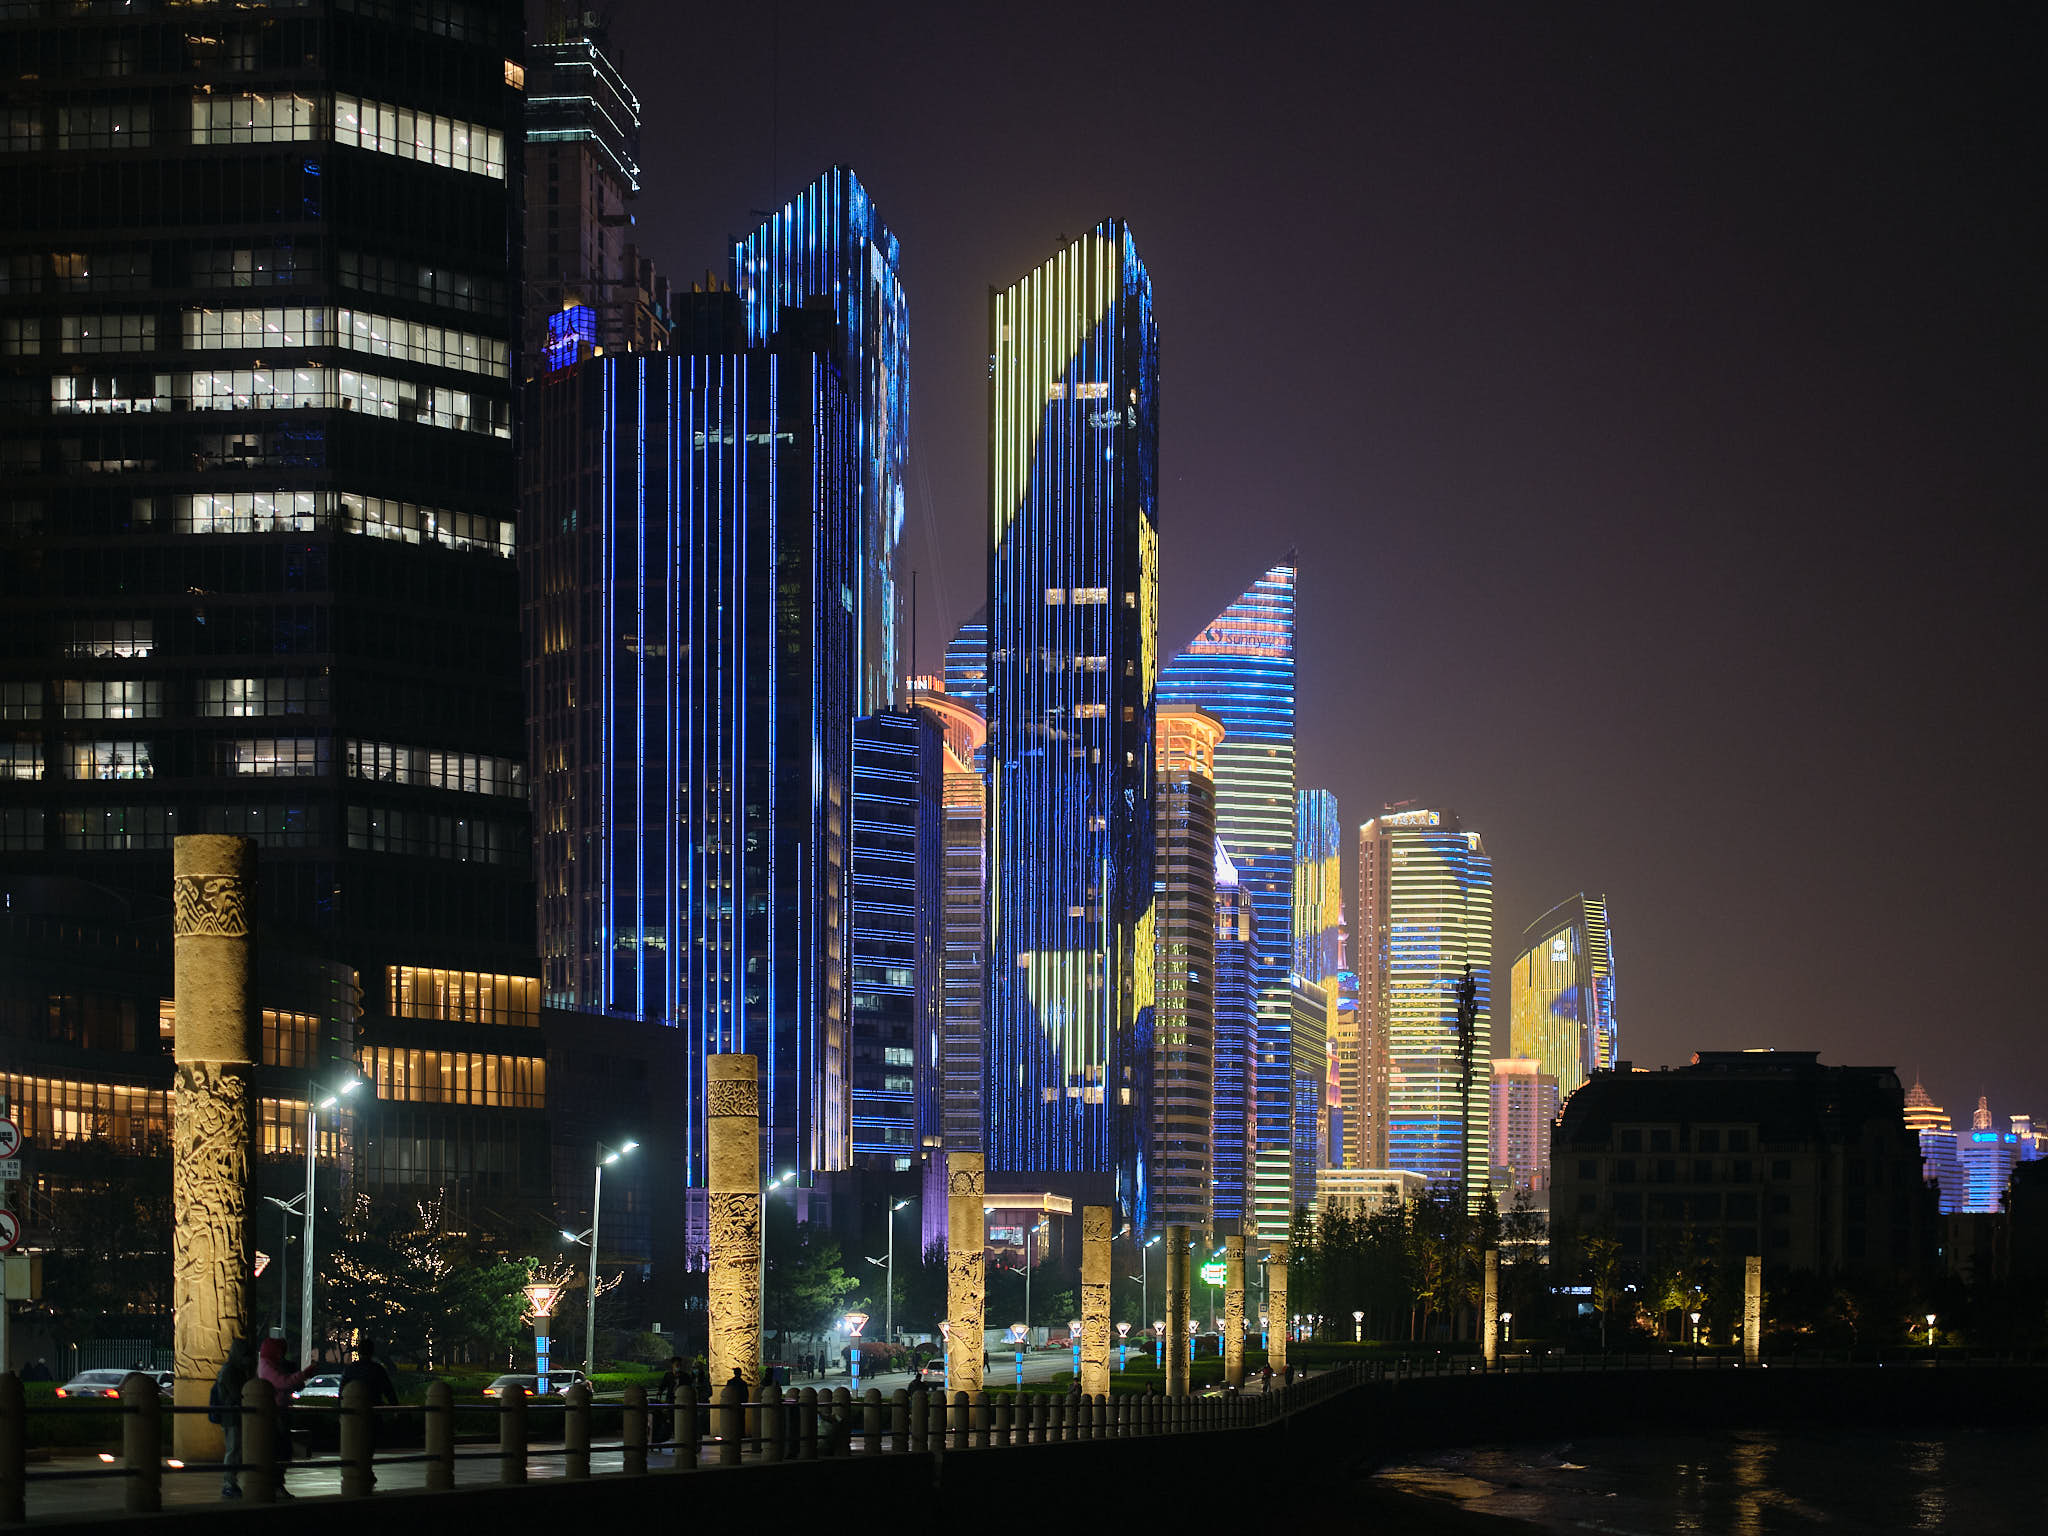 Qingdao buildings light up at night